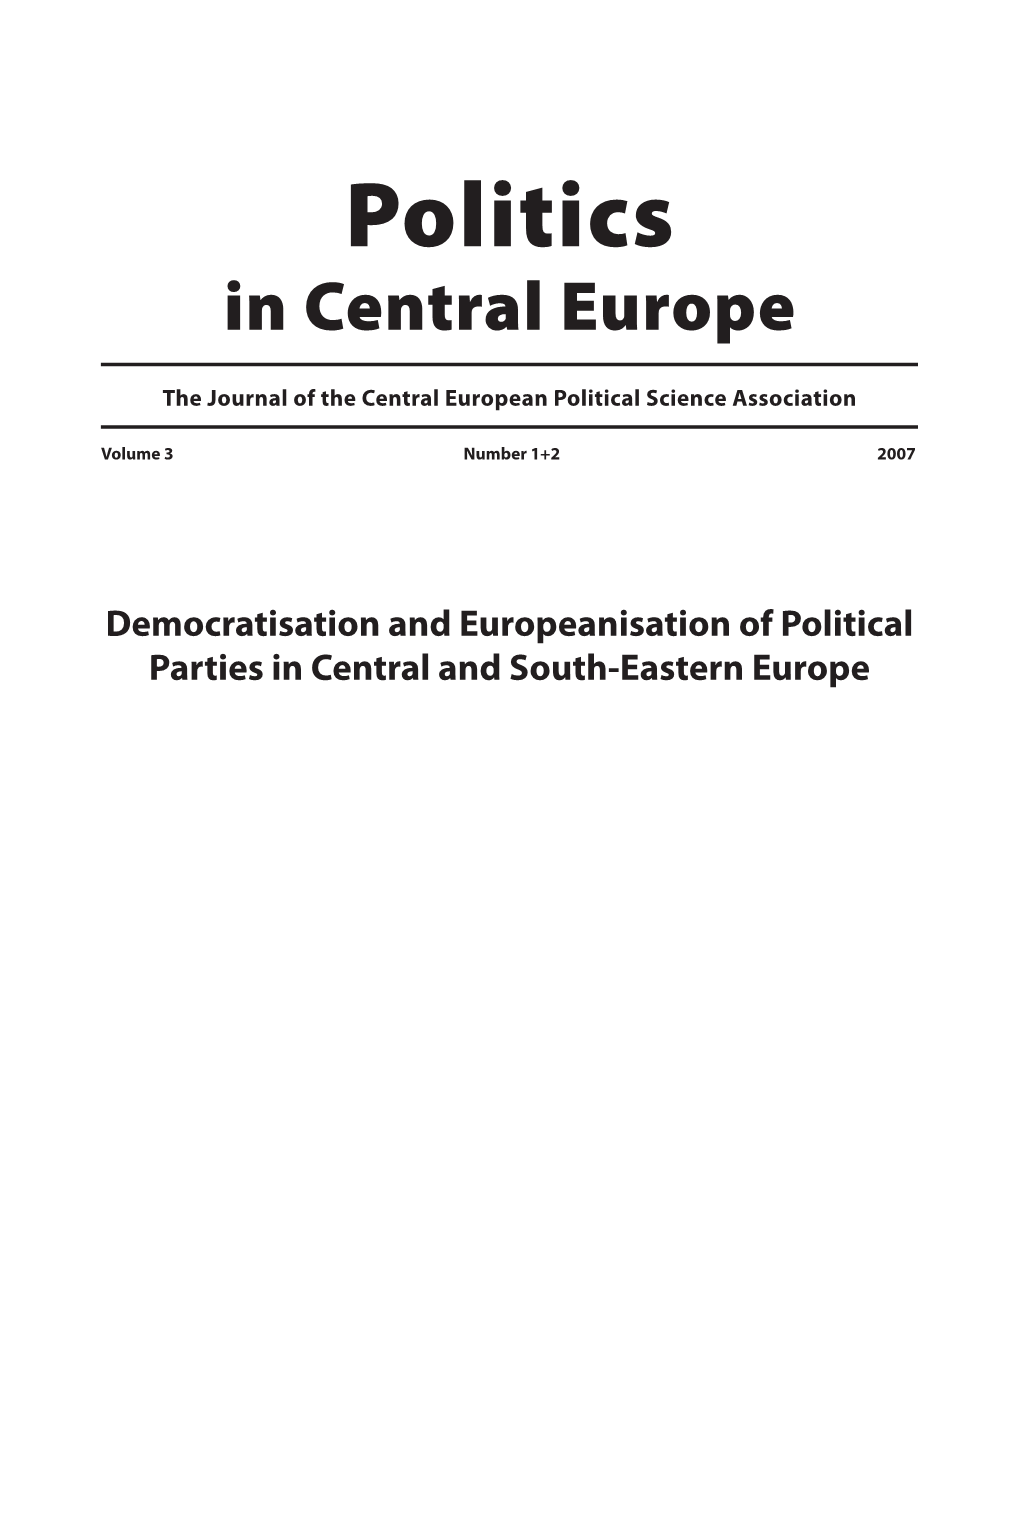 Politics in Central Europe